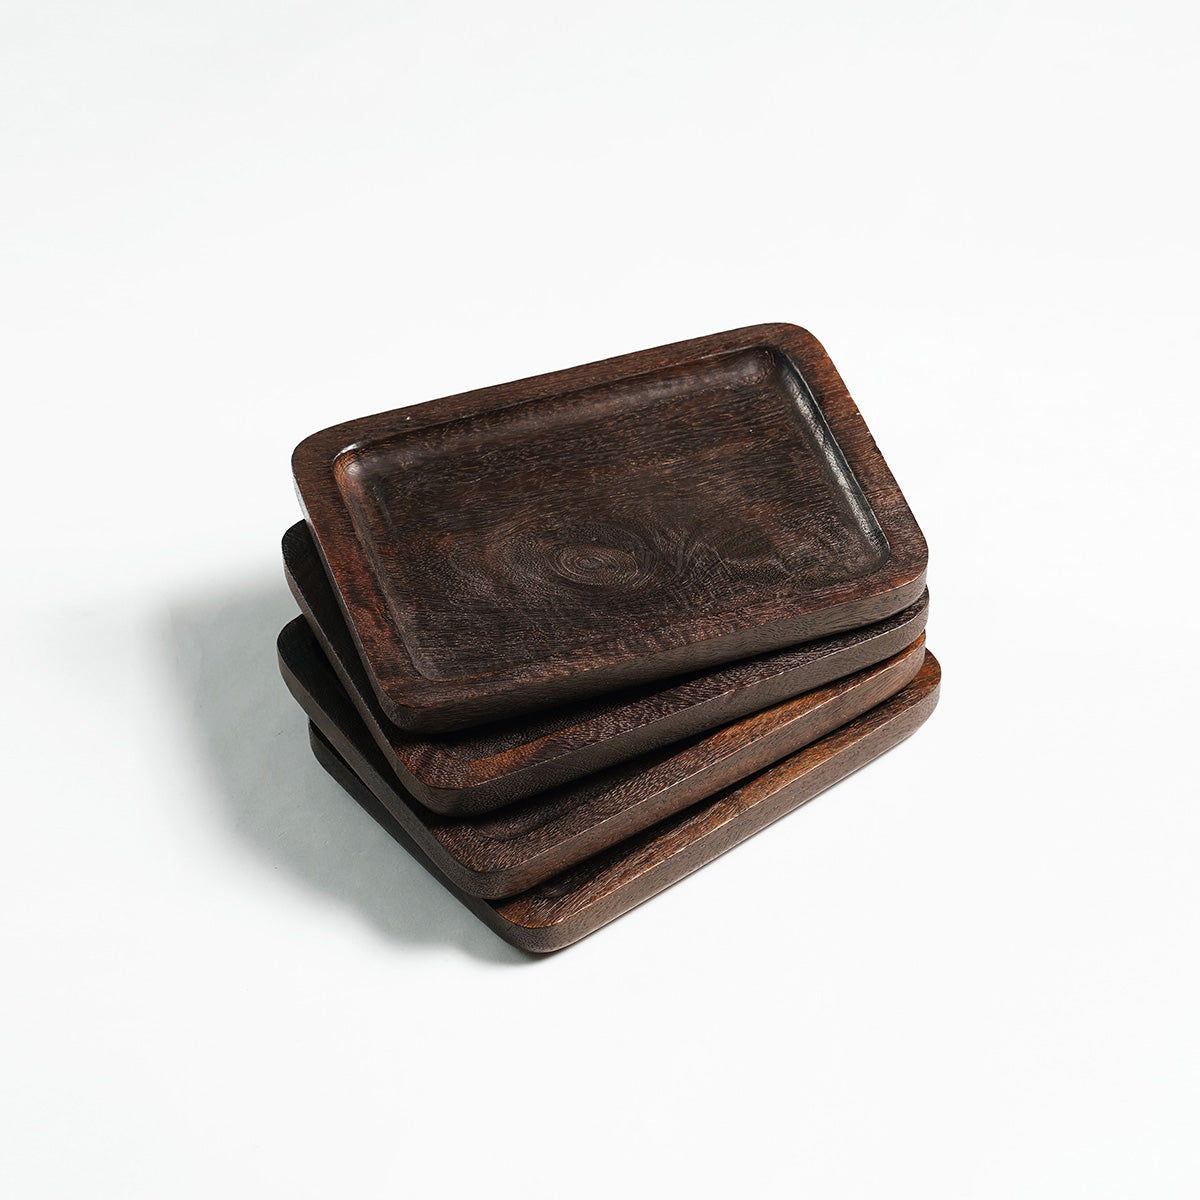 Small Dark wood tray, round edged rustic serving tray, farmhouse decor, 5X7 inches